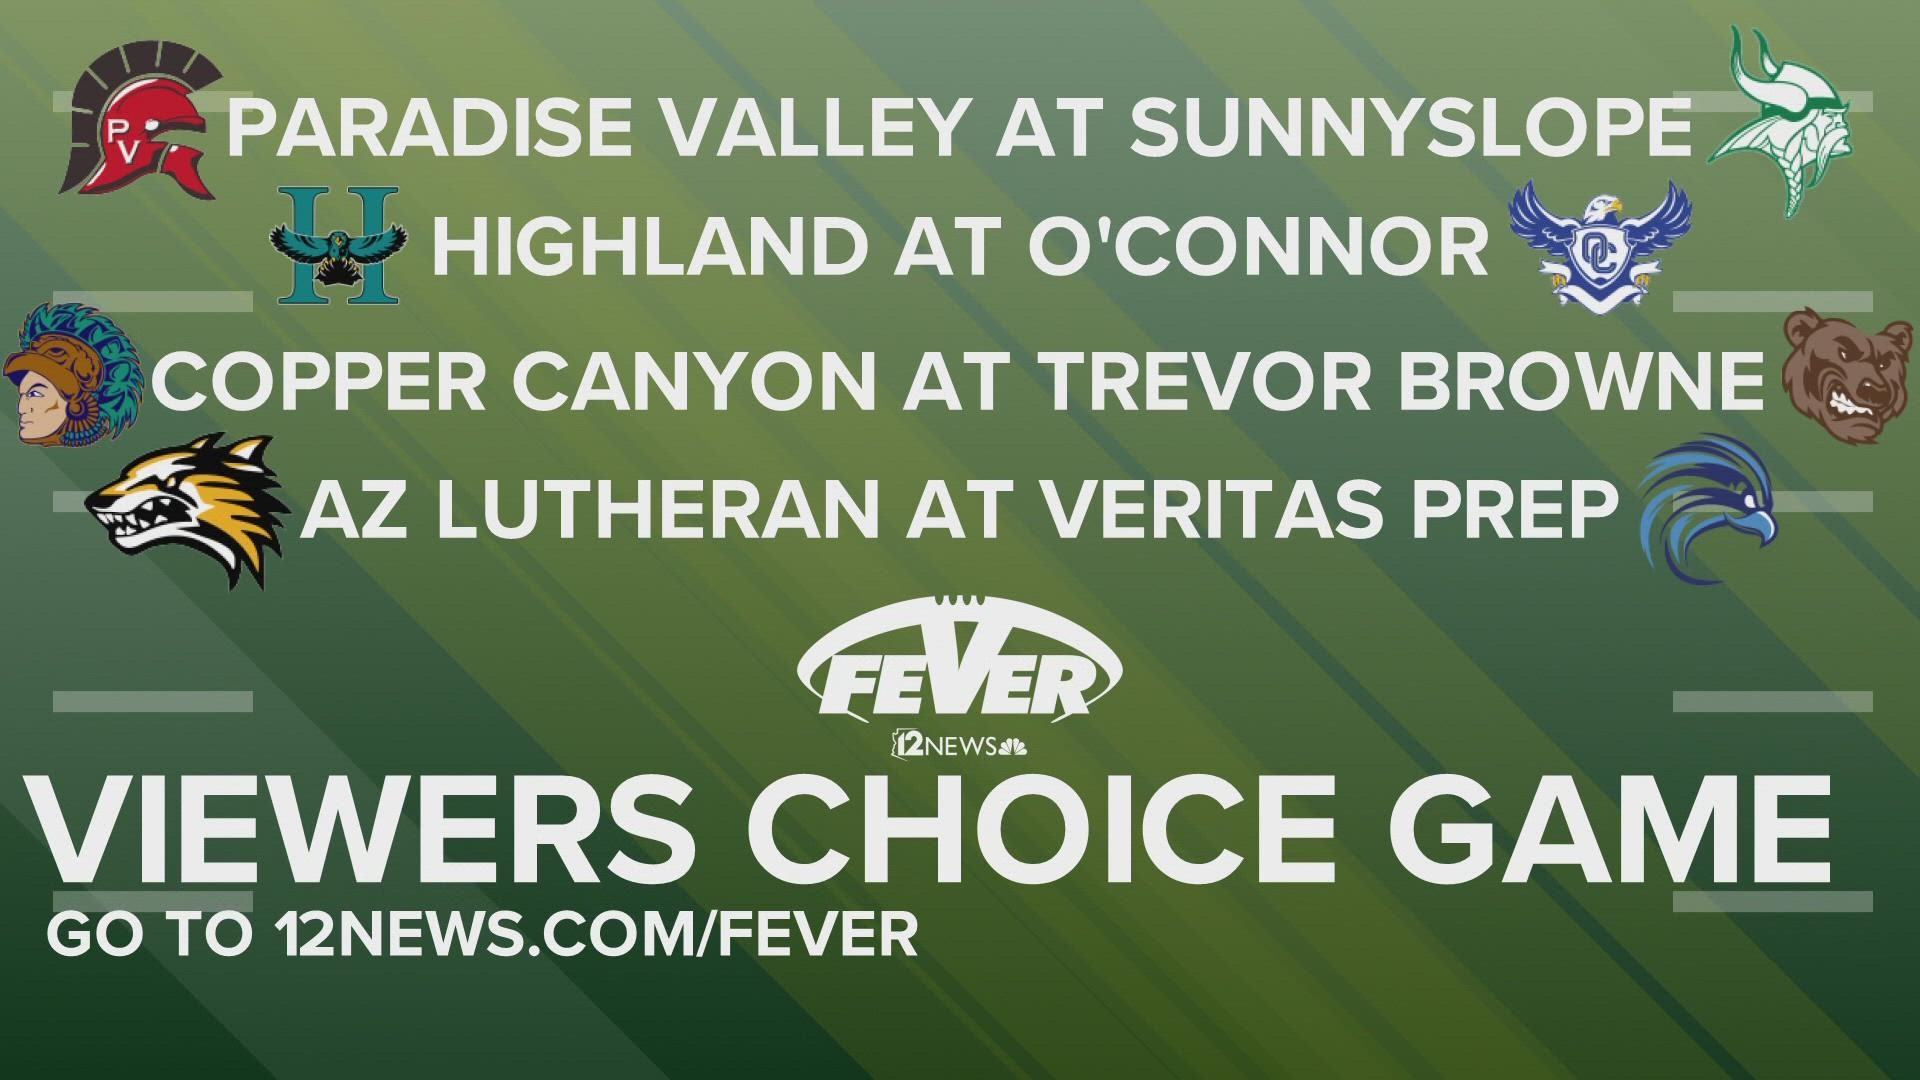 Vote to send the Fever team to Paradise Valley @ Sunnyslope, Highland @ O'Connor, Copper Canyon @ Trevor Browne or AZ Lutheran @ Veritas Prep!